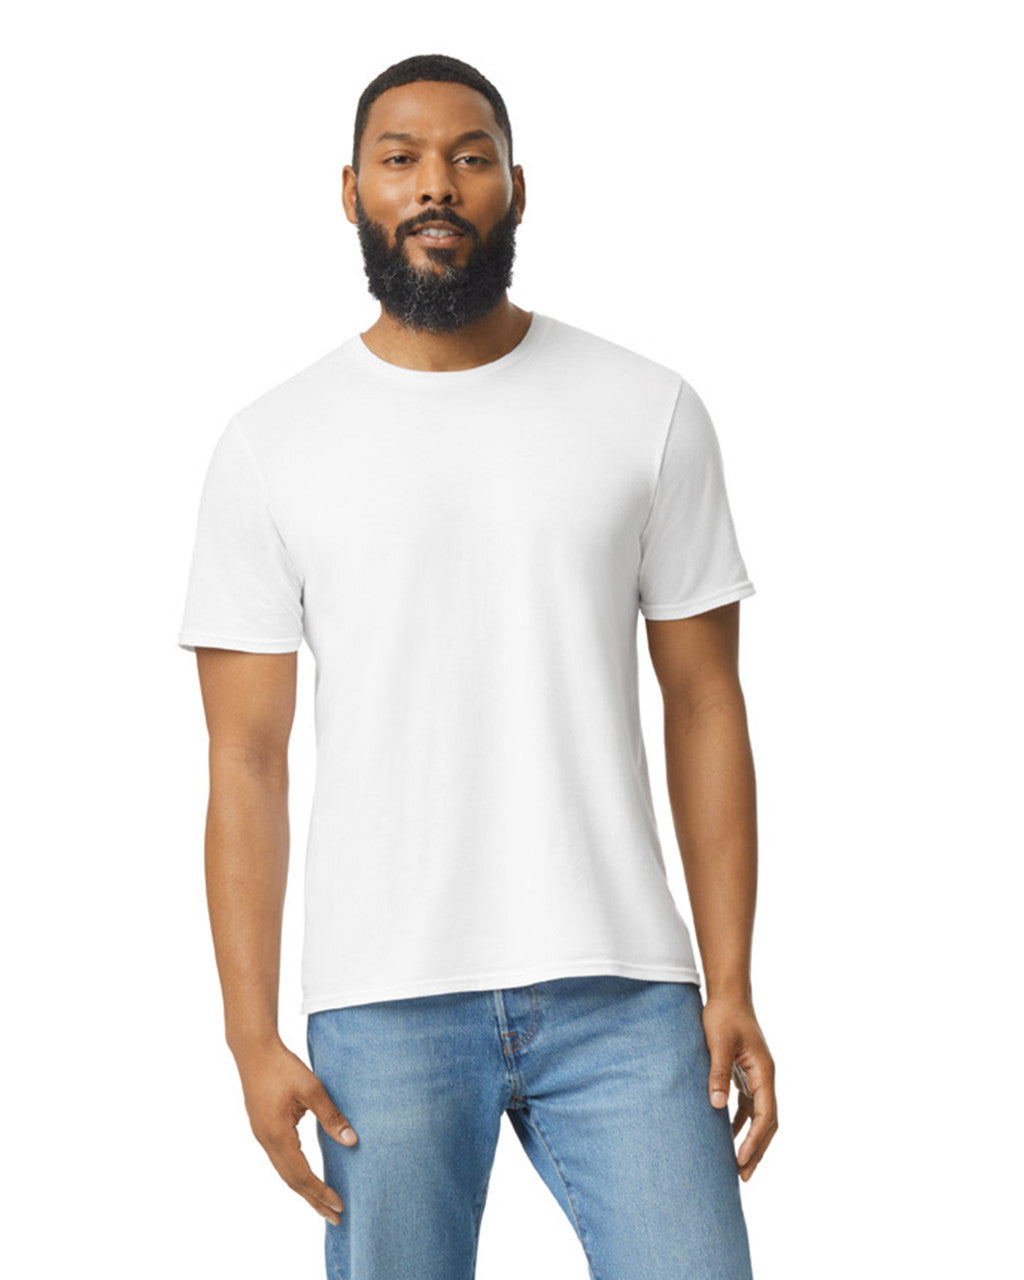 Gildan Softstyle Ringspun Cotton T-Shirt - Adult Men's & Kids Sizes 